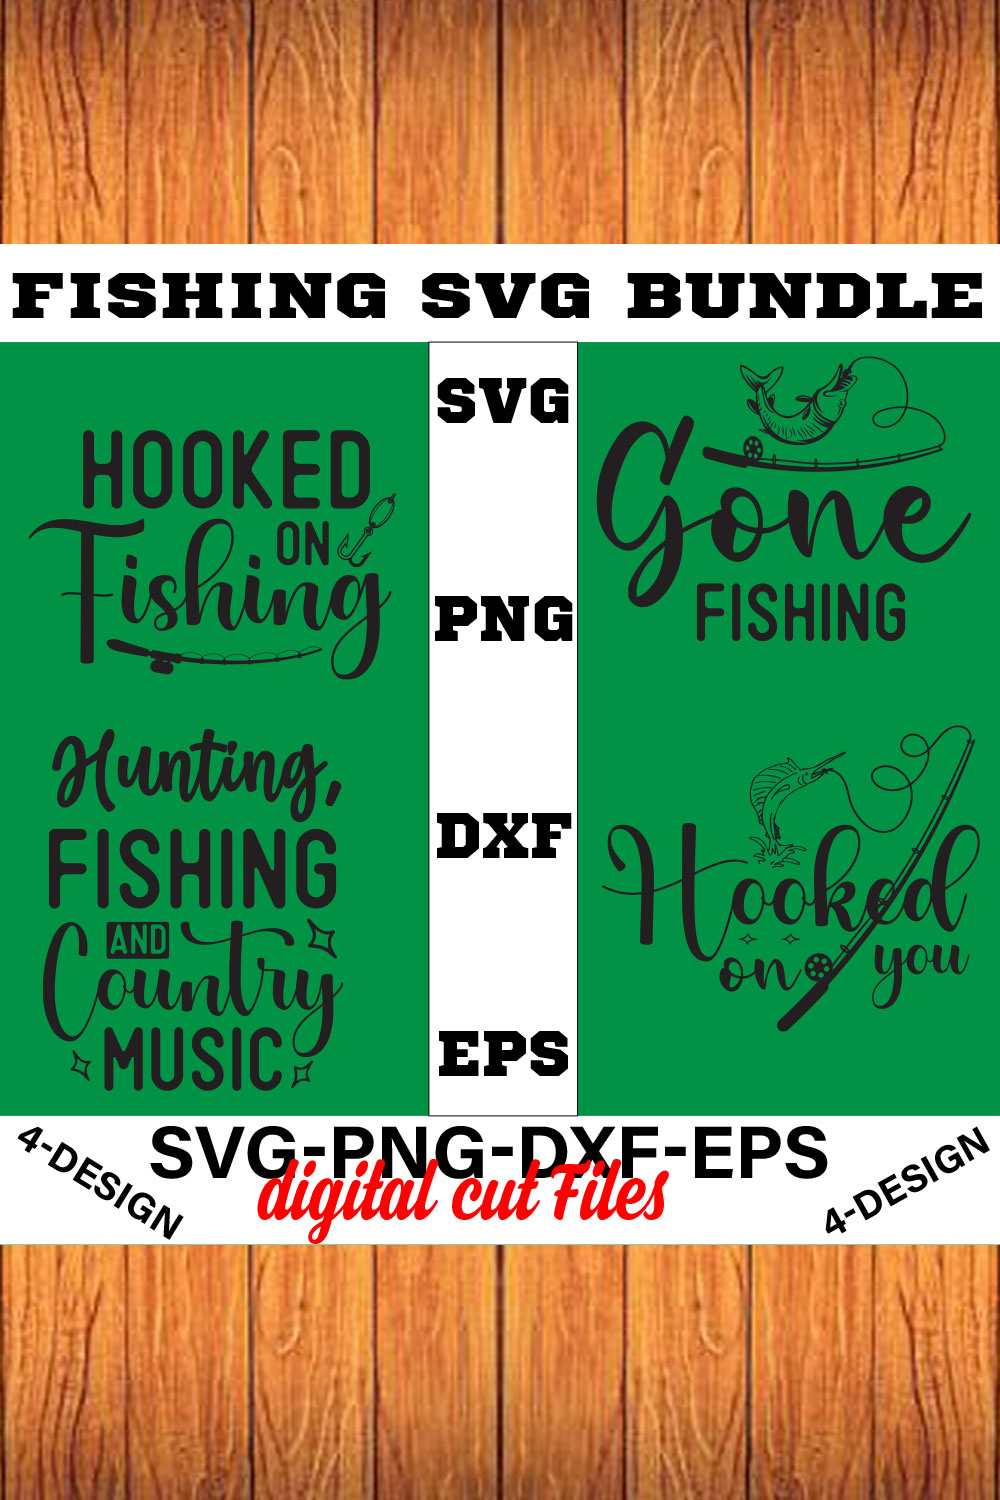 Fishing Design Bundle PNG ONLY, SVG bundle, Fishing svg, Fishing life Volume-02 pinterest preview image.